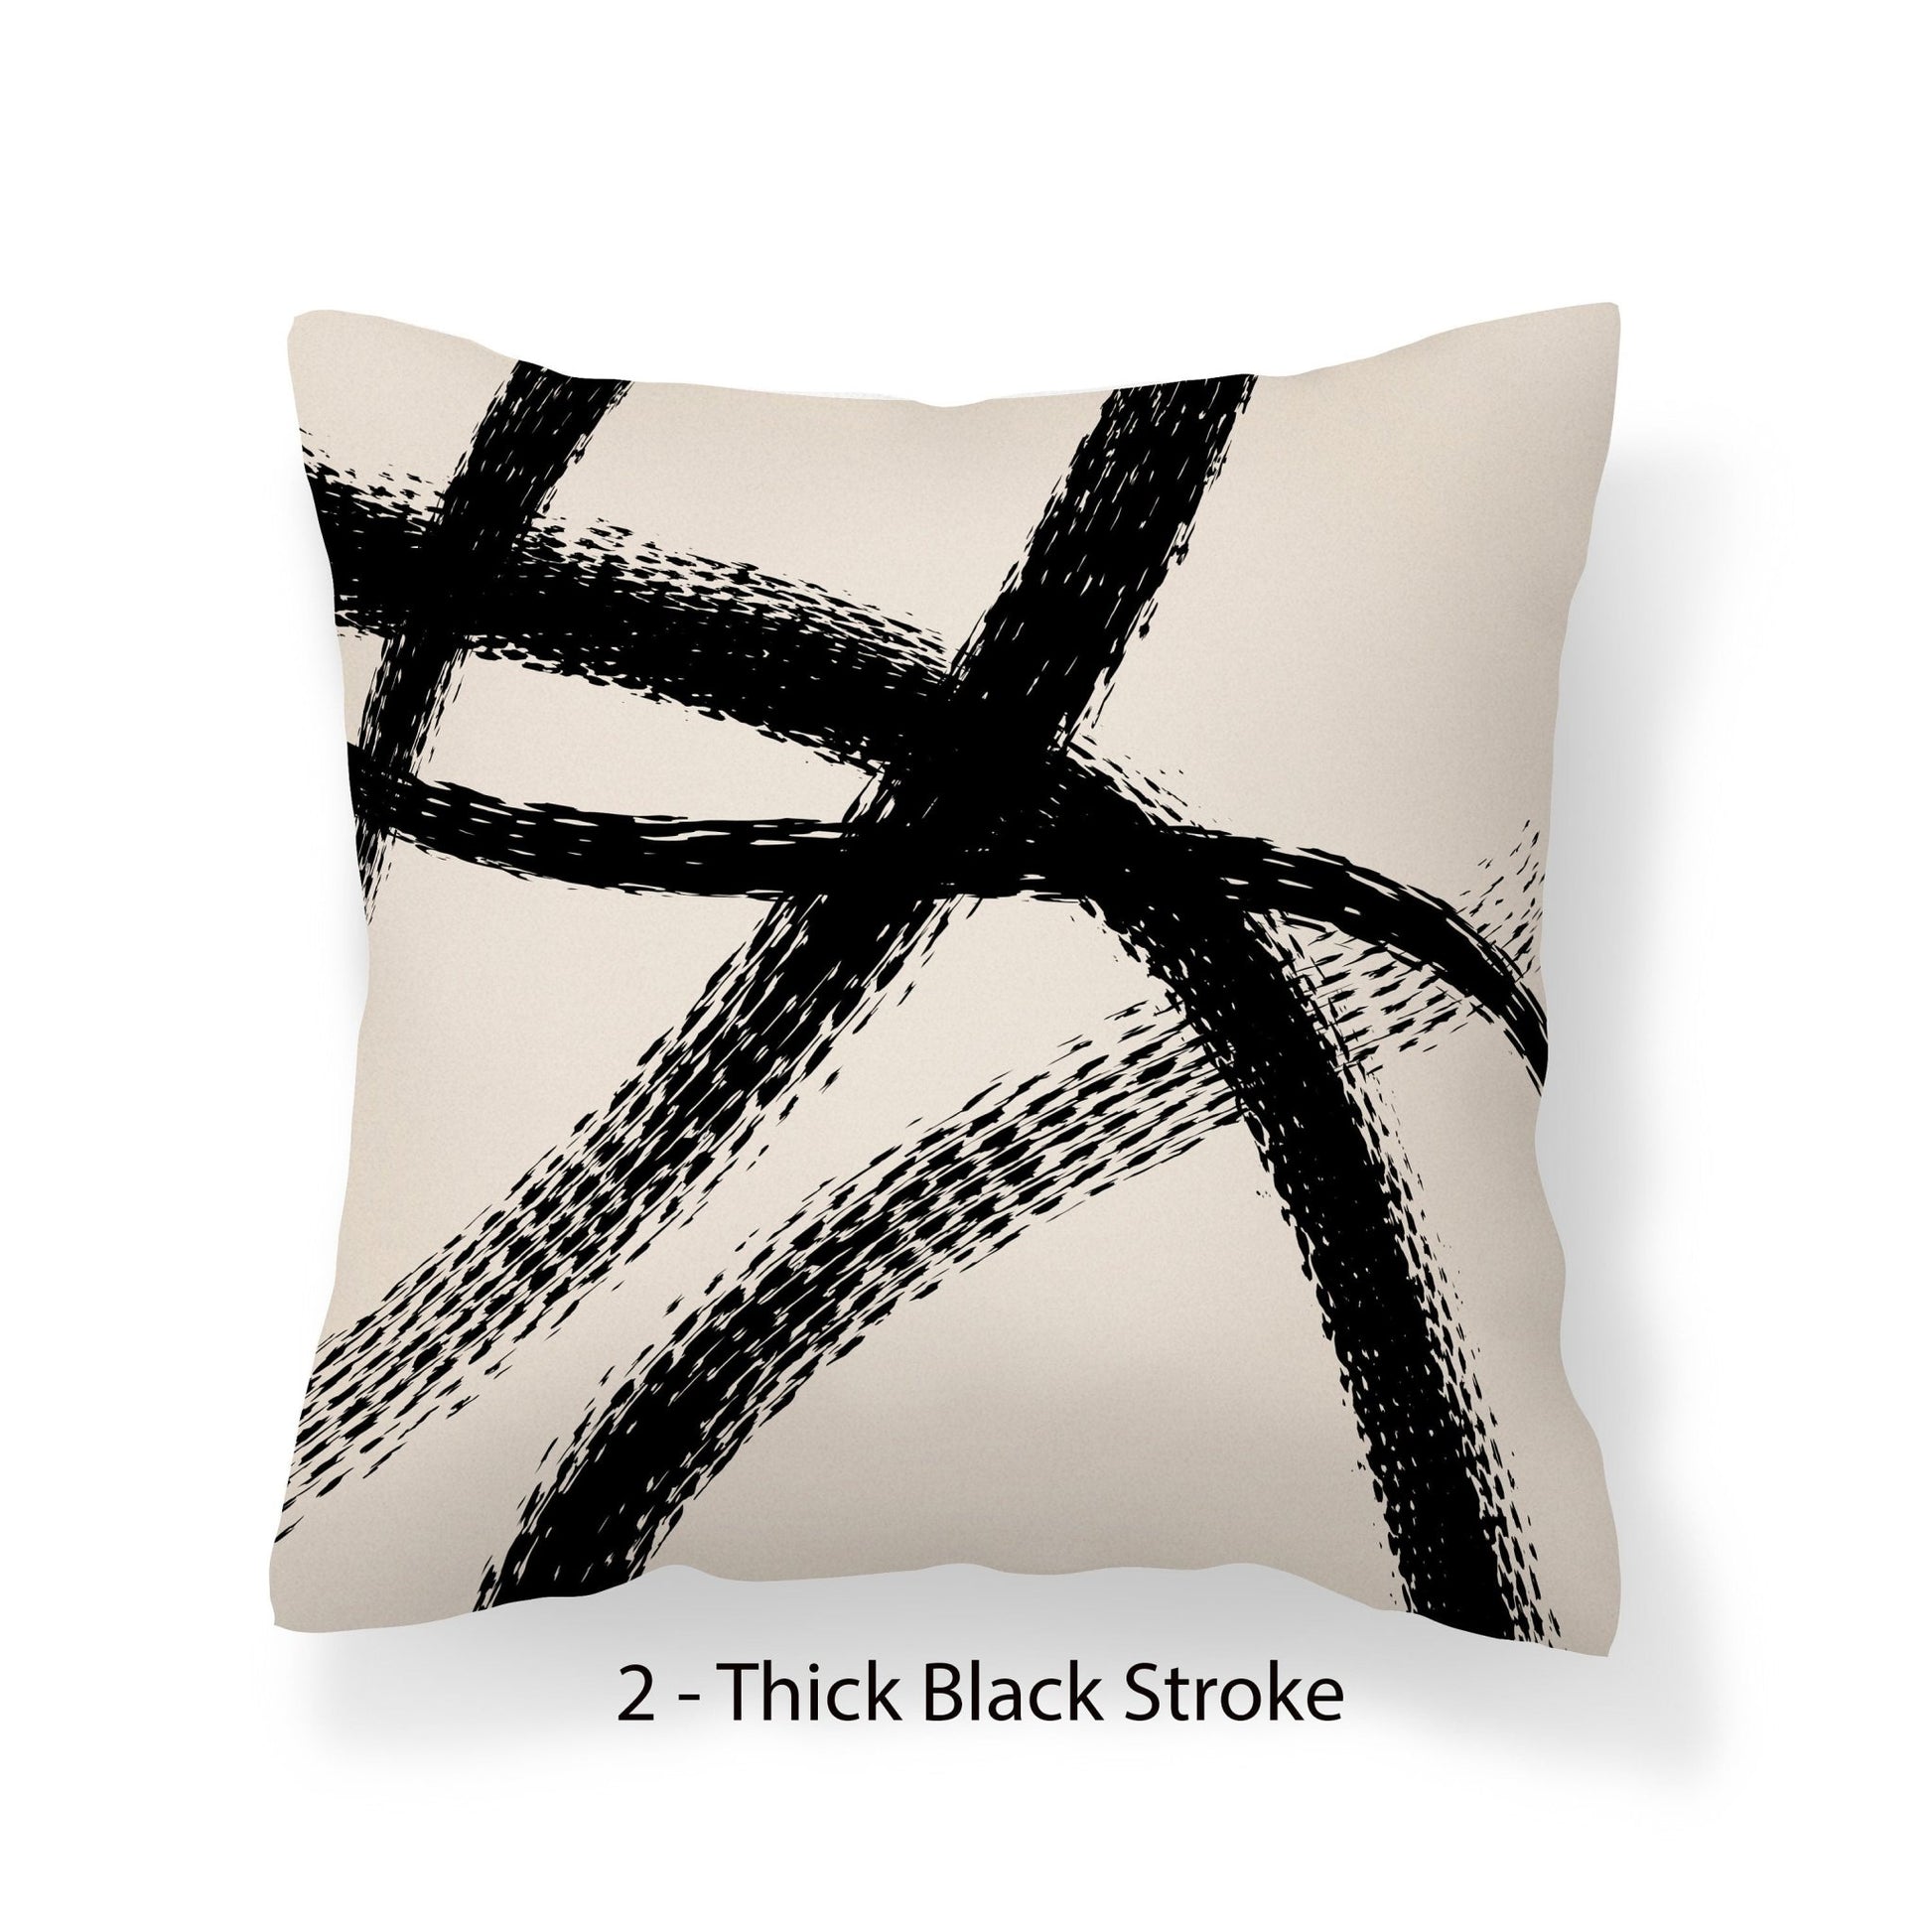 Tan Pillows with Black